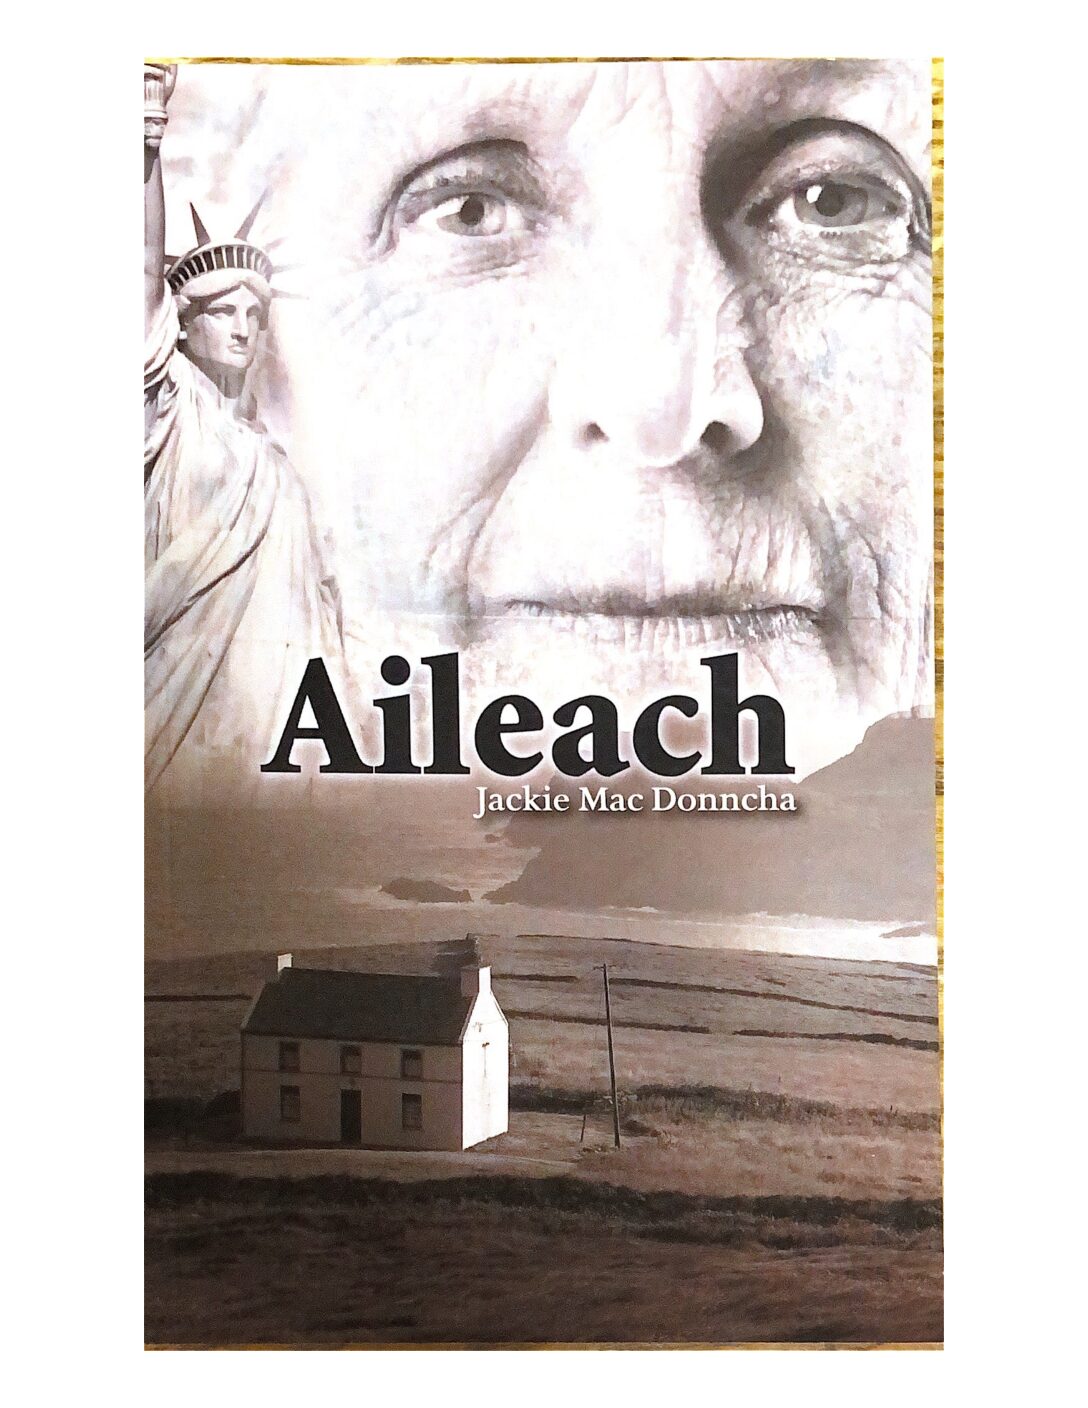 Aileach by Jackie Mac Donncha